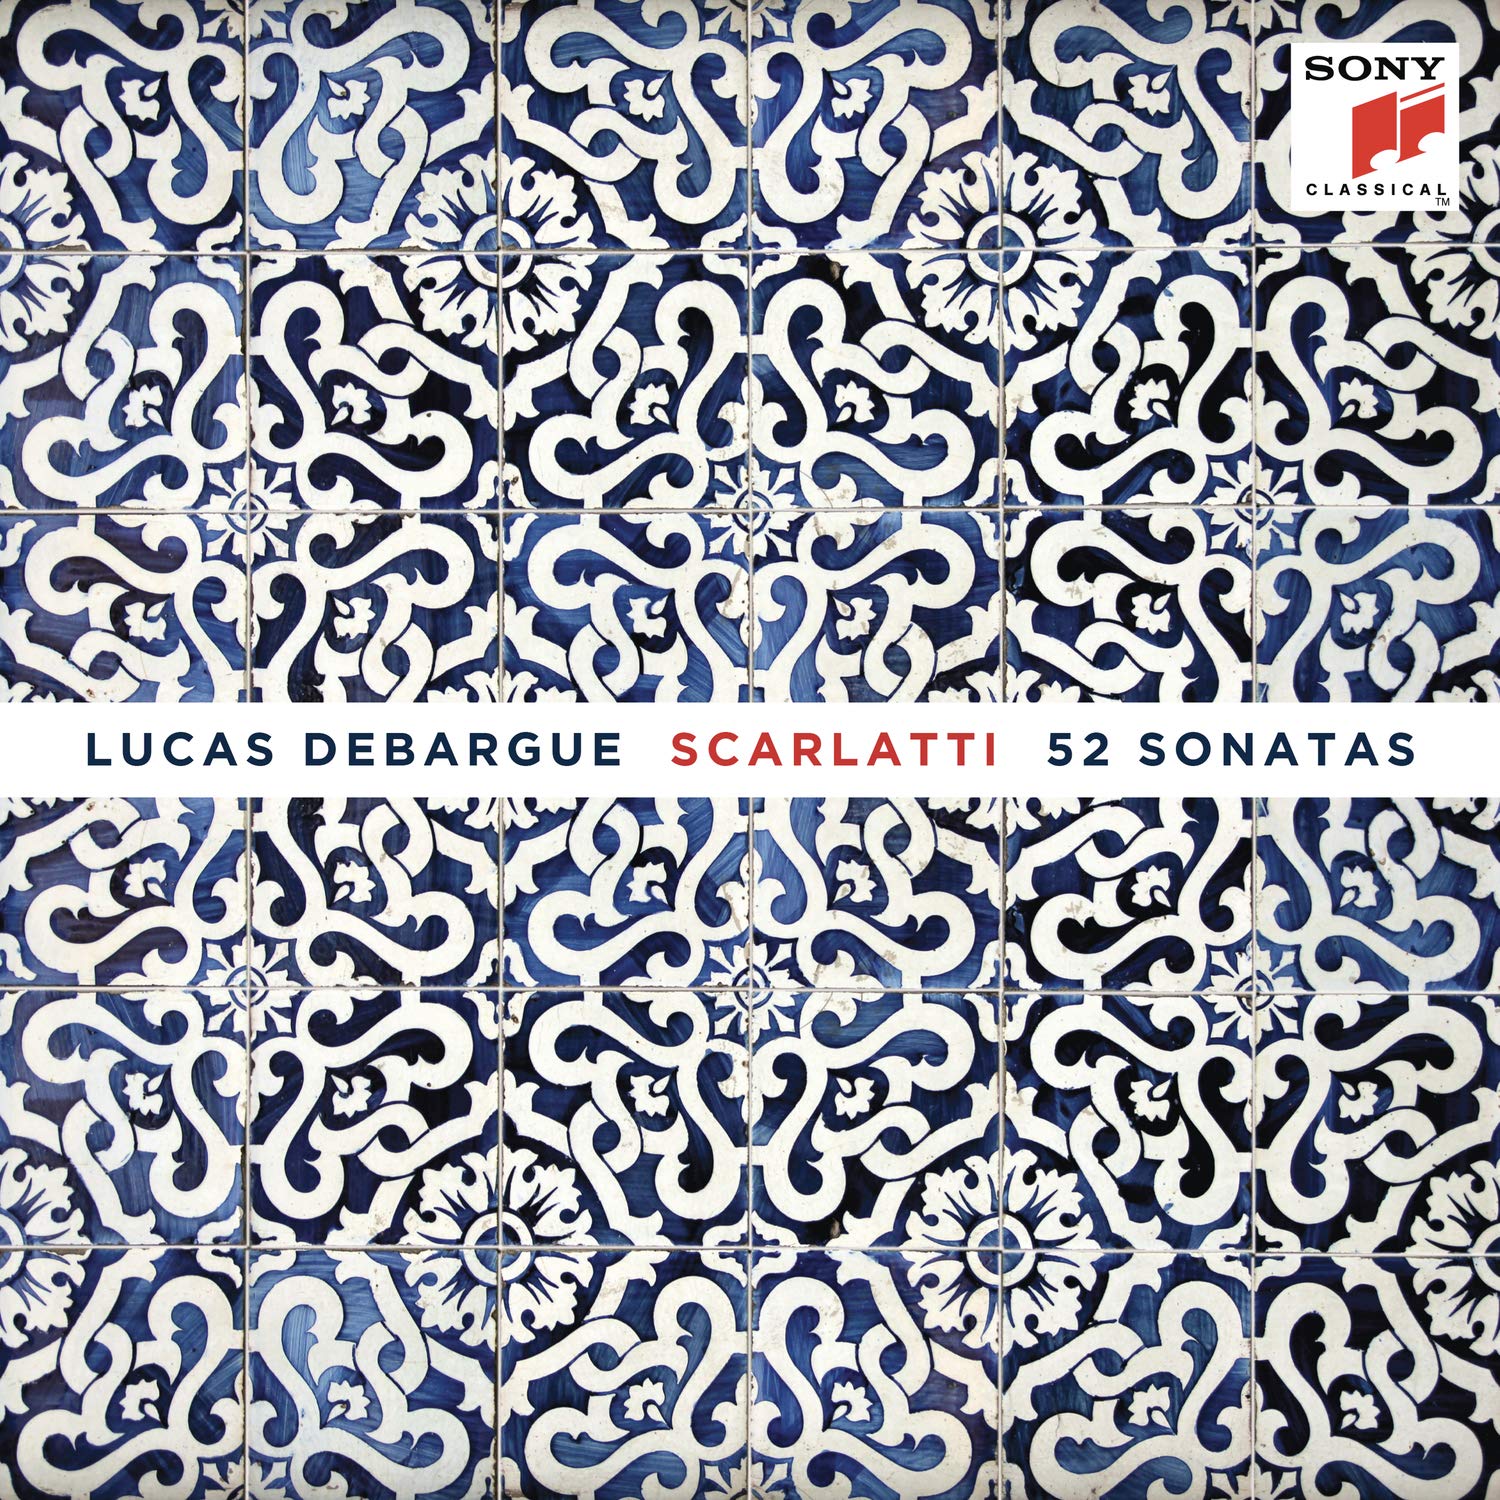 Scarlatti: 52 Sonatas | Lucas Debargue carturesti.ro poza noua